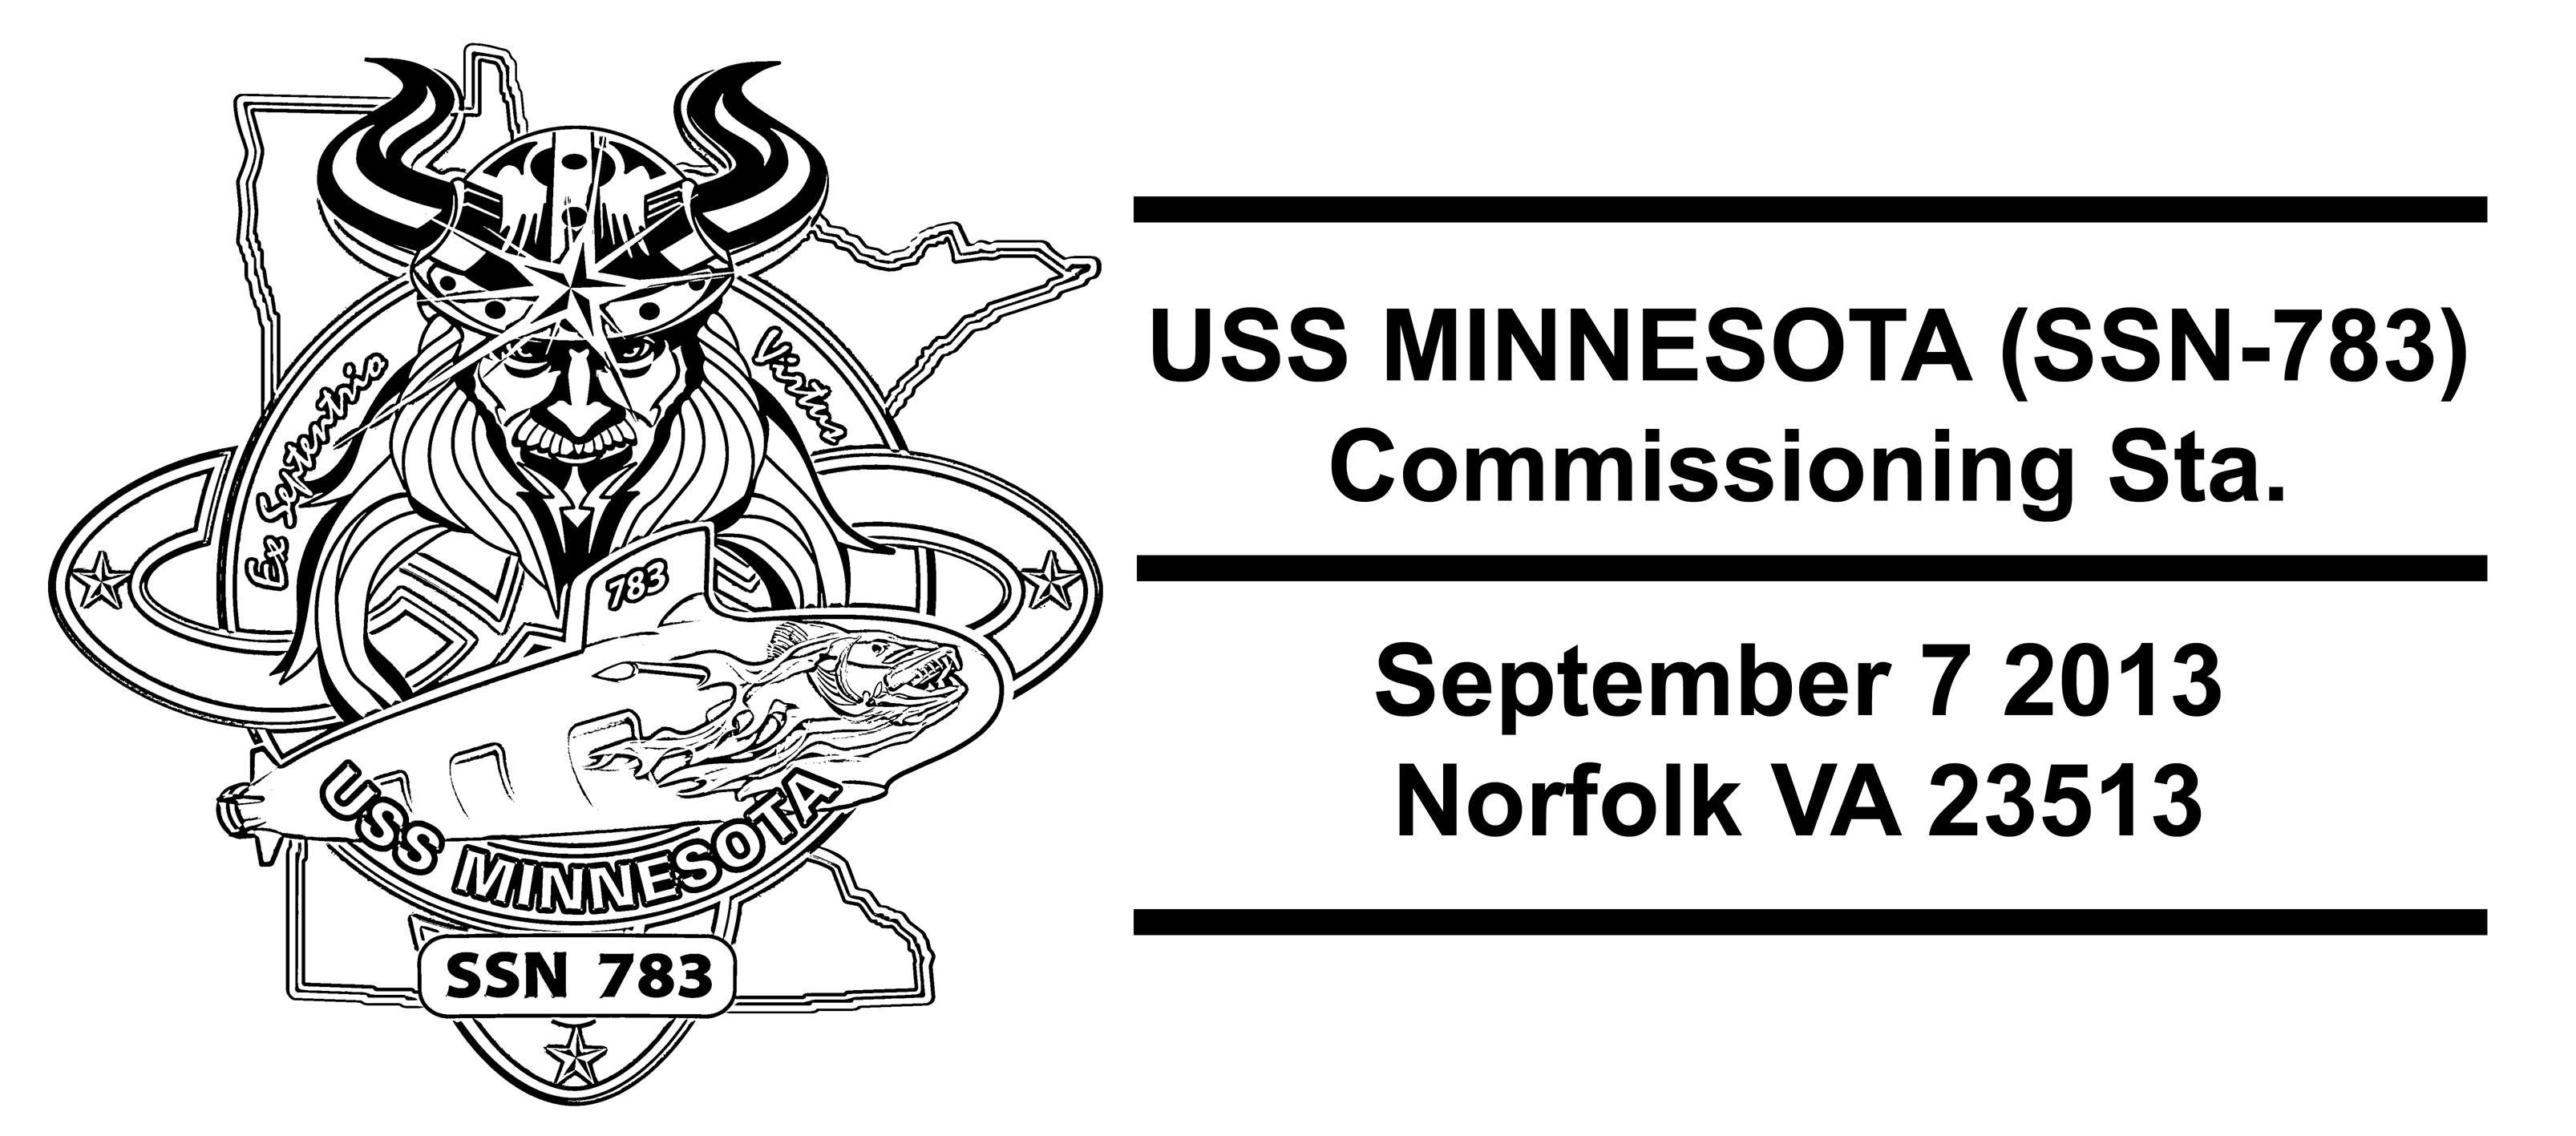 Sonderpoststempel USS MINNESOTA SSN-783 CommissioningGrafik: Wolfgang Hechler